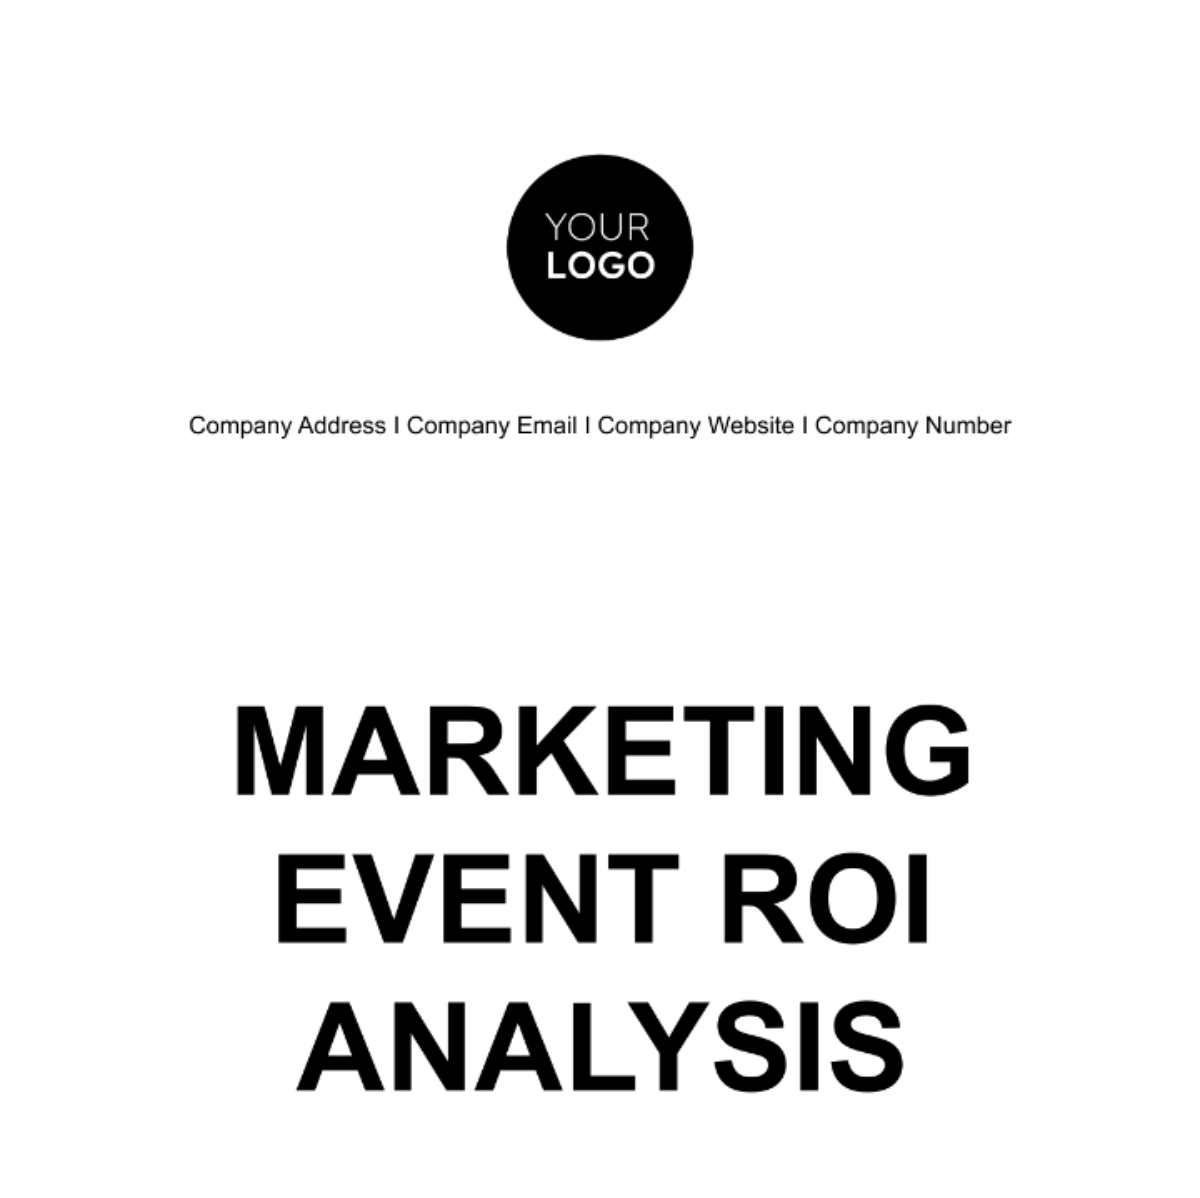 Marketing Event ROI Analysis Template